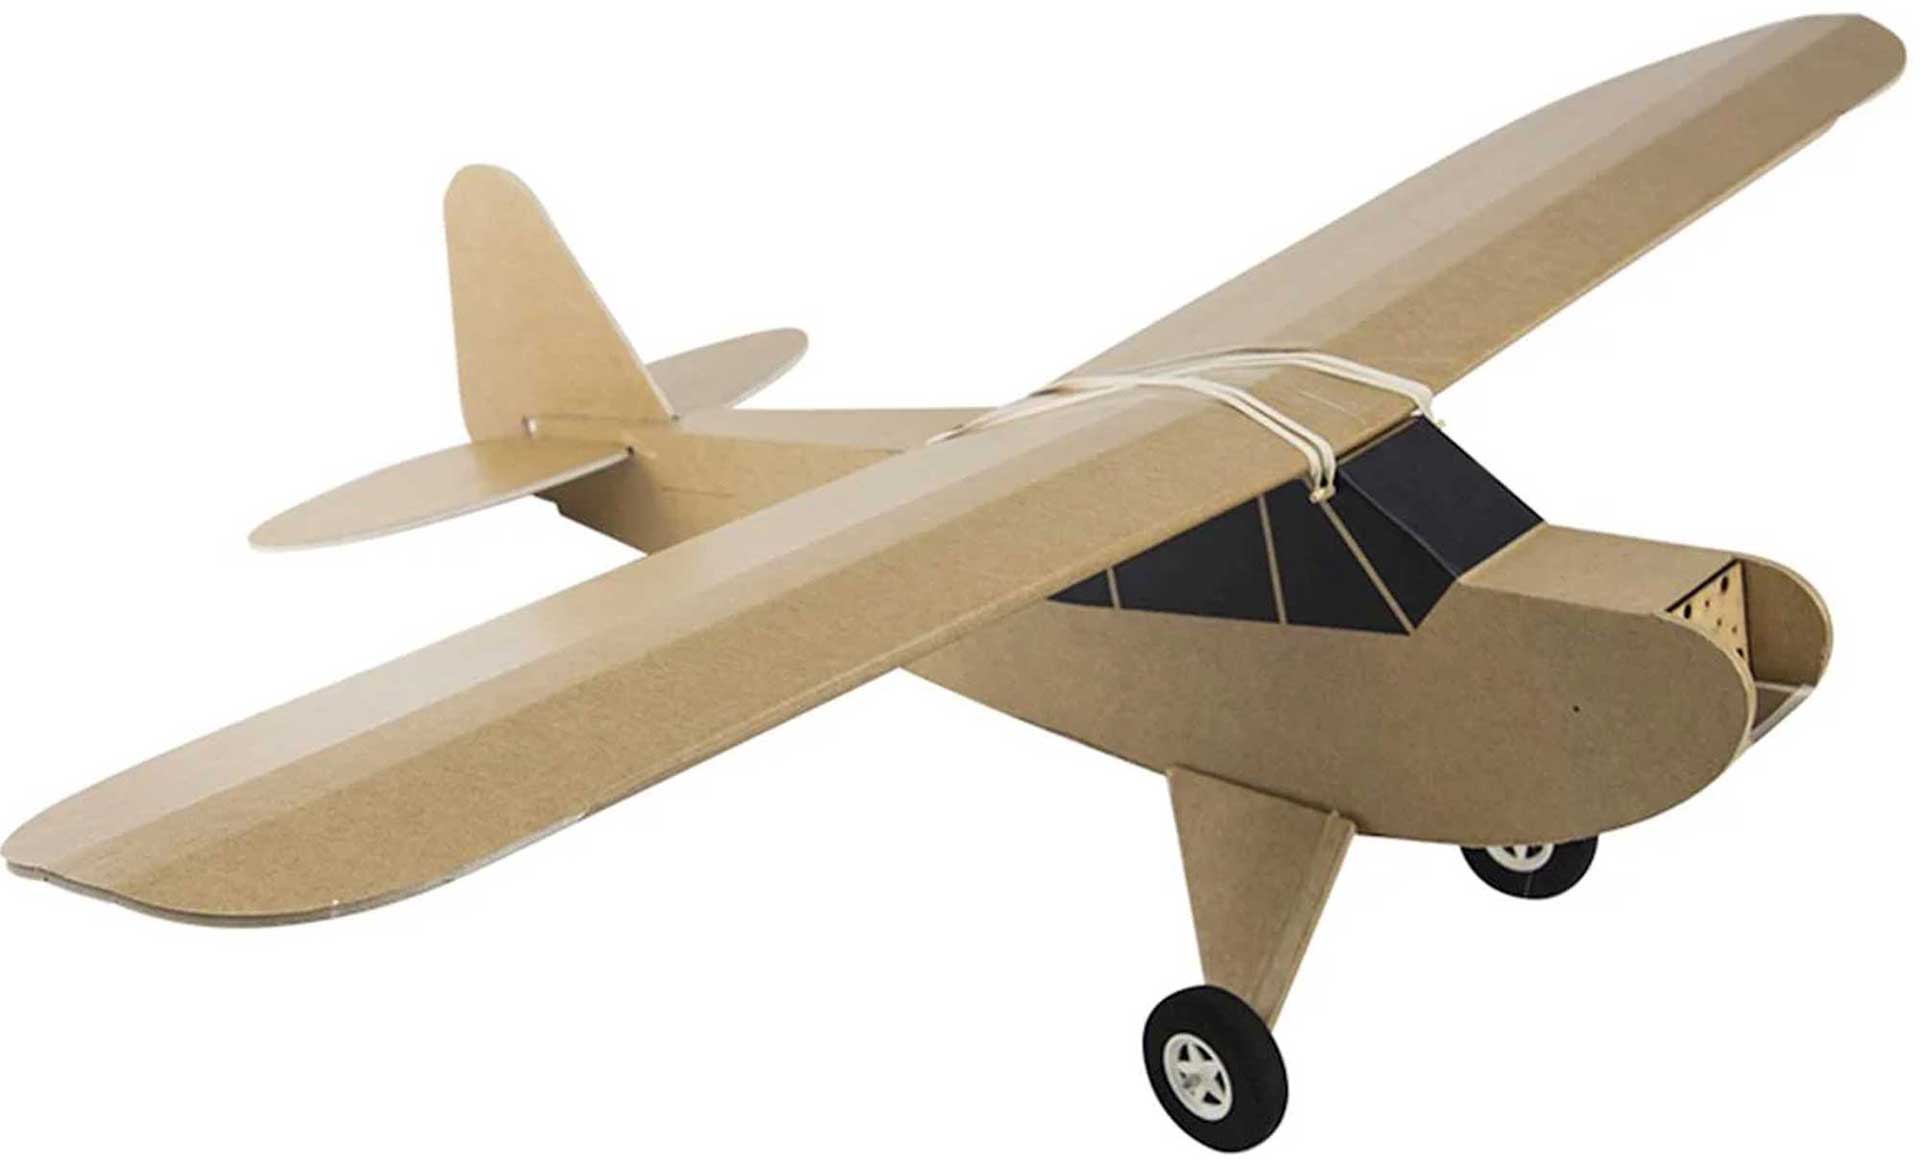 FLITE TEST Simple Cub Electric Airplane Kit (956mm)